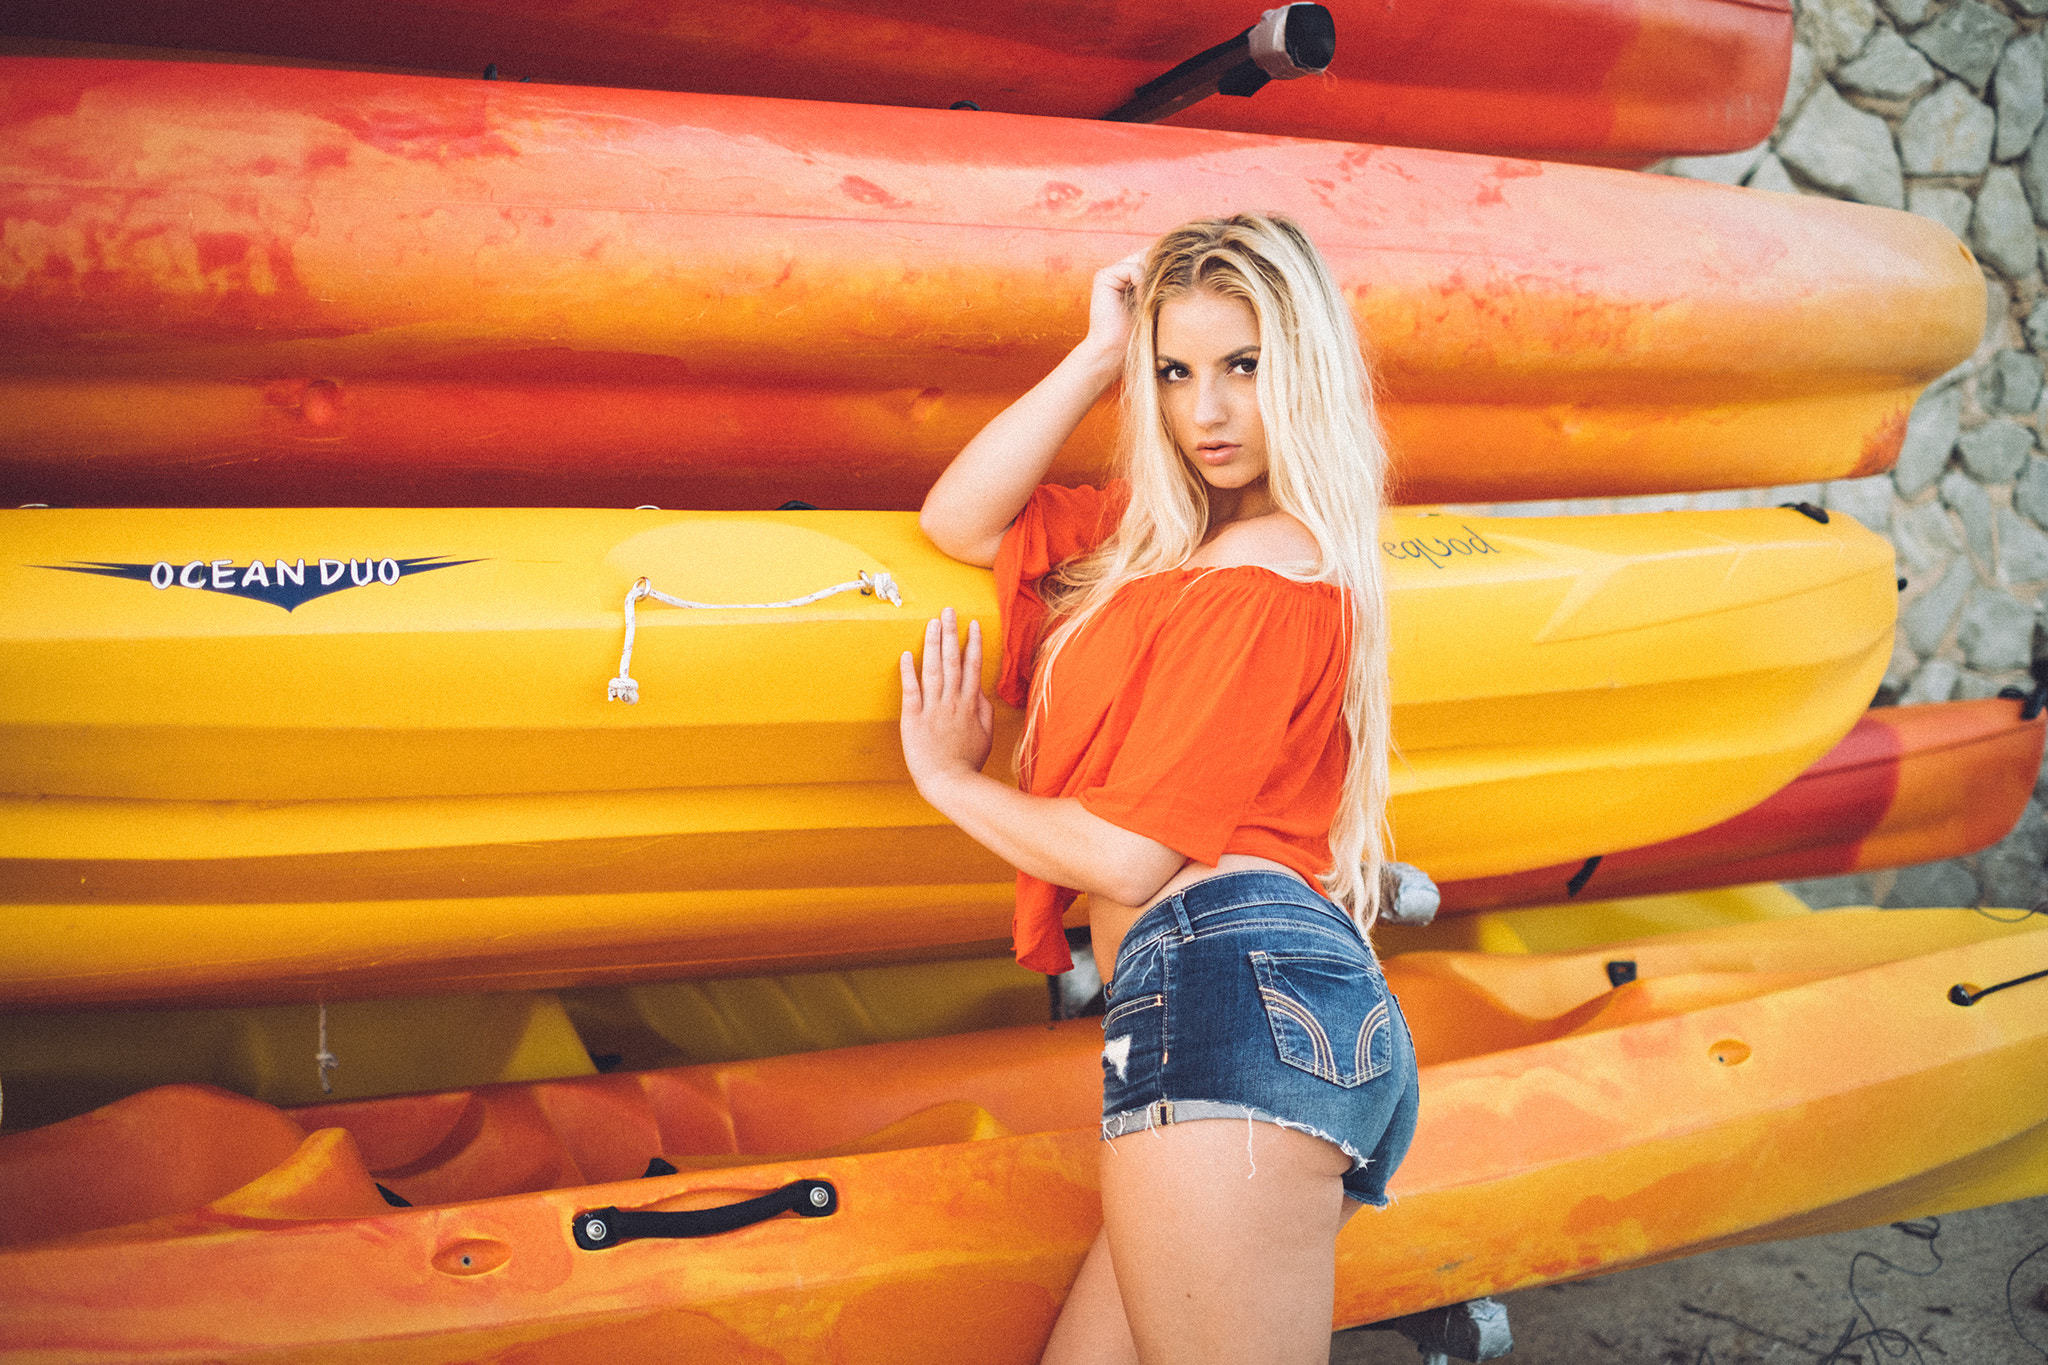 Image: Girl, blonde, posing, shorts, boat